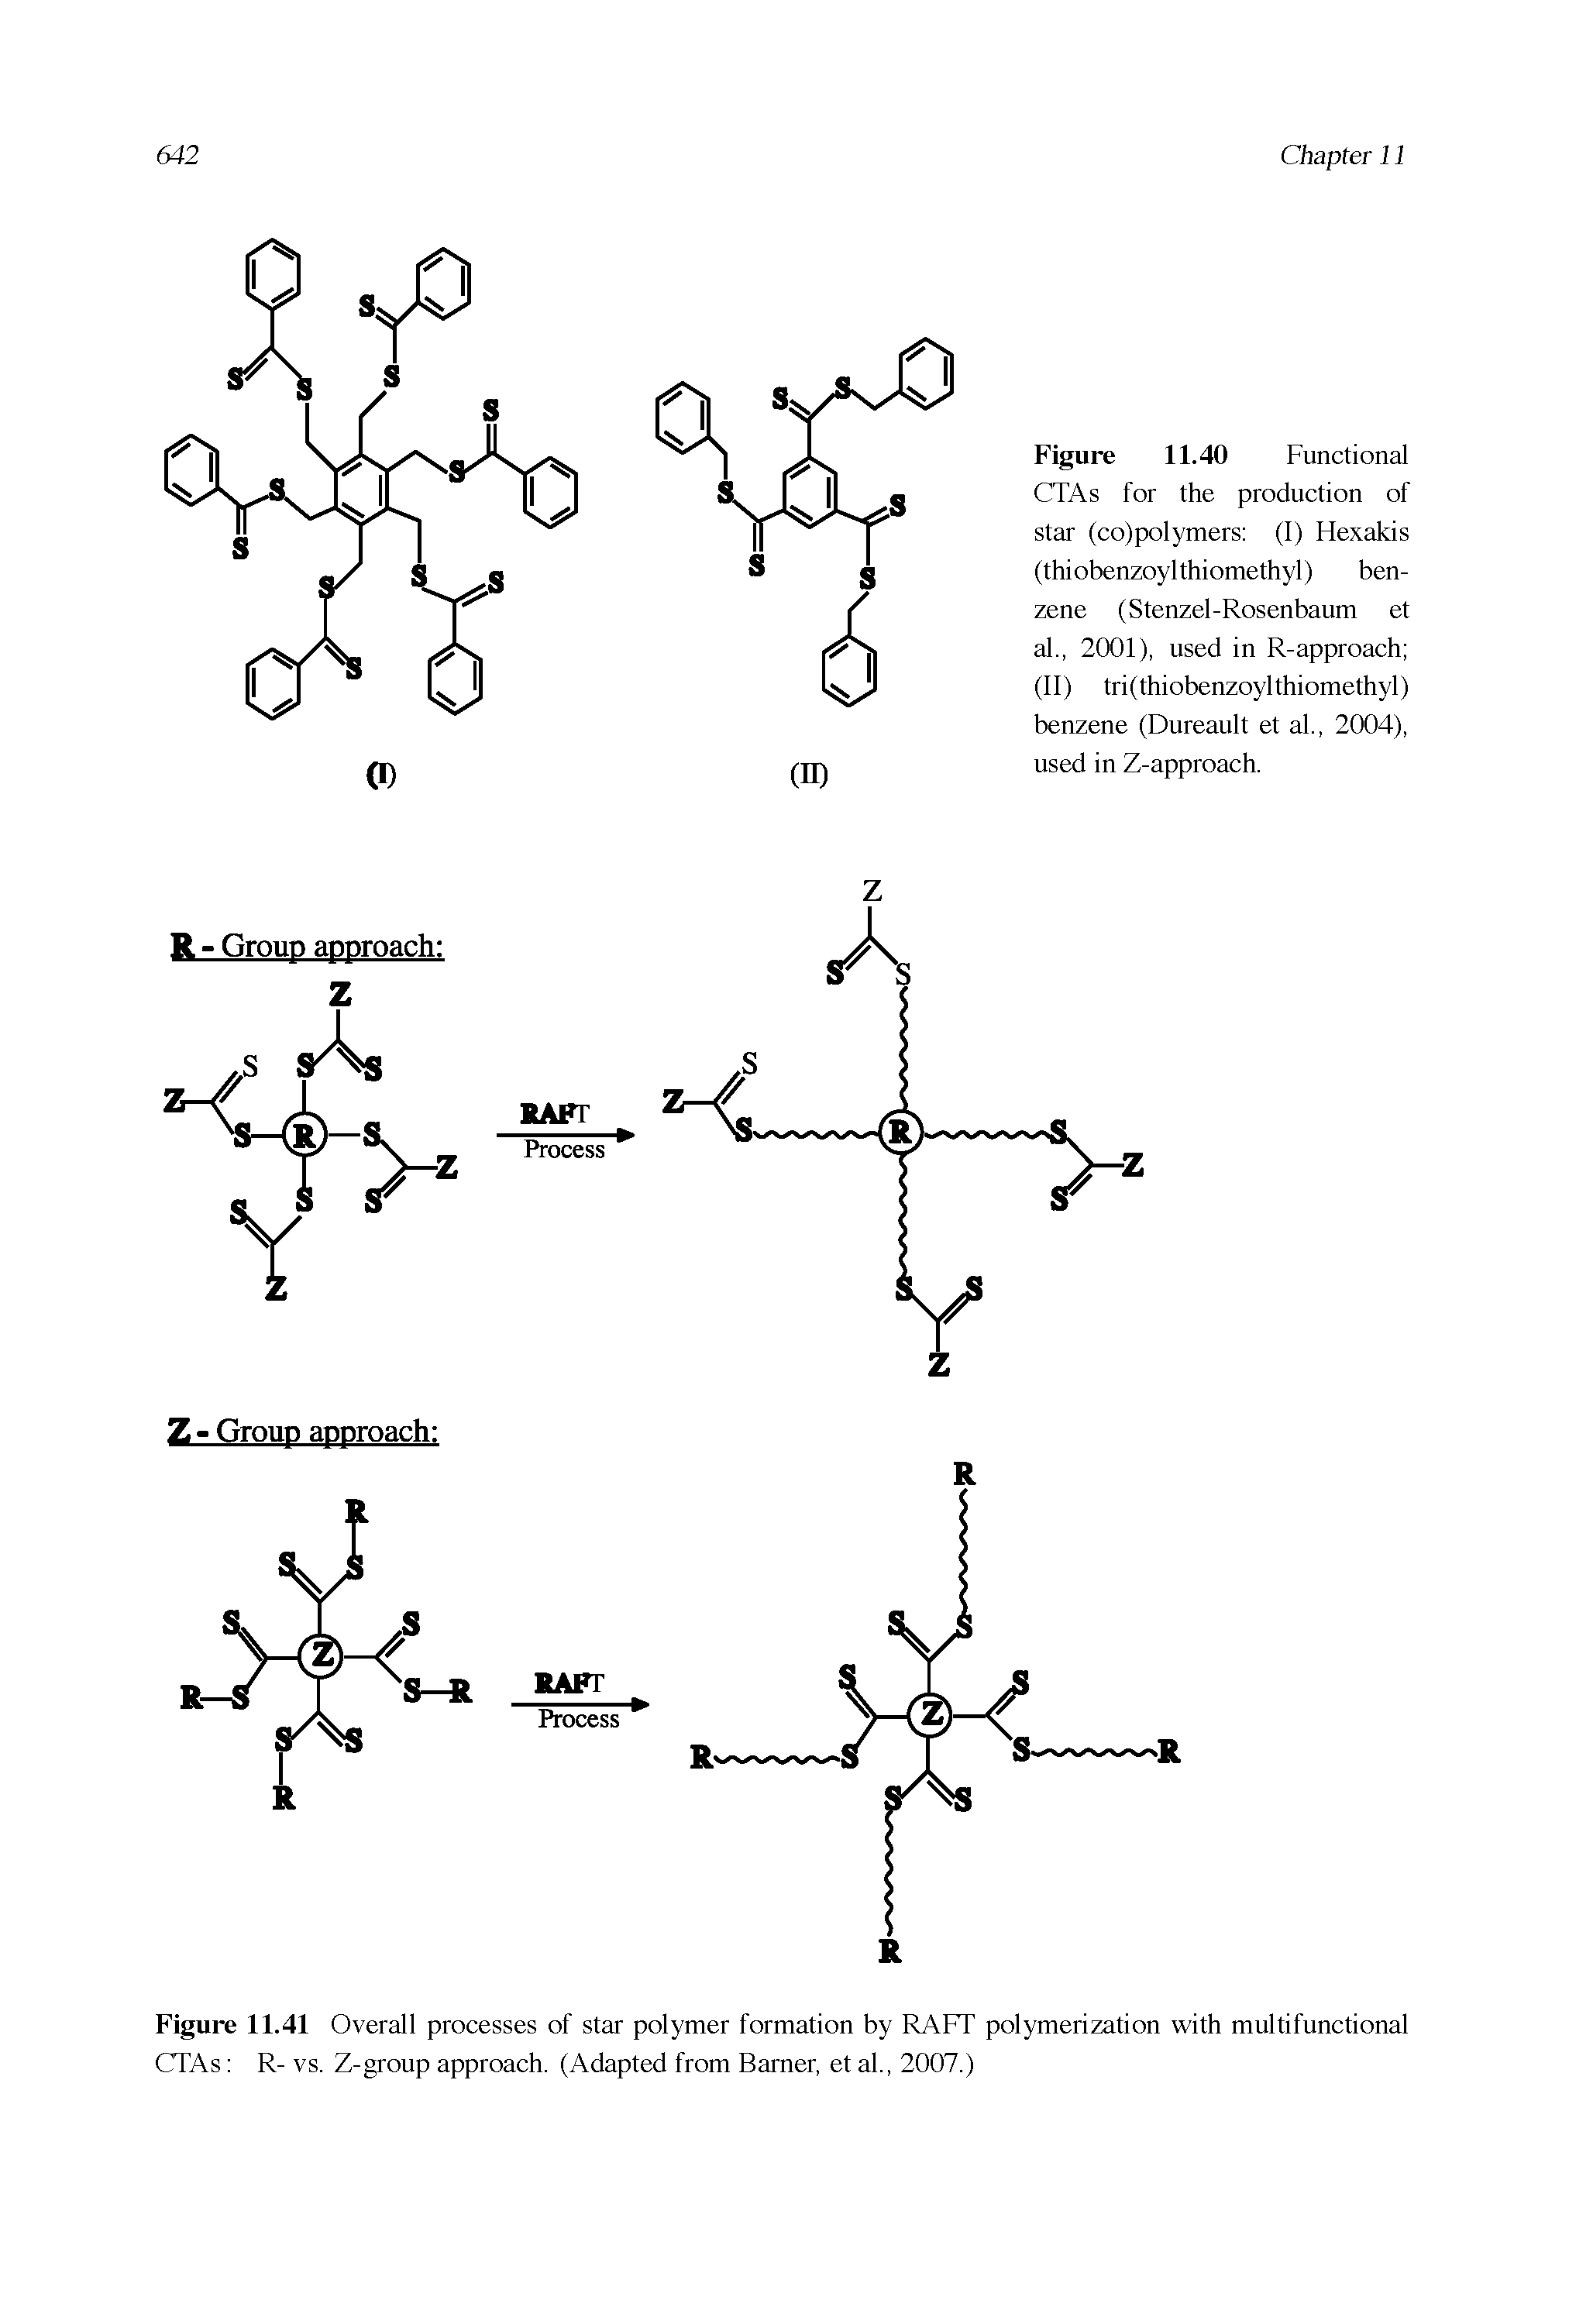 Figure 11.40 Functional CTAs for the production of star (co)polymers (I) Flexakis (thiobenzoylthiomethyl) benzene (Stenzel-Rosenbaum et al., 2001), used in R-approach (II) tri(thiobenzoylthiomethyl) benzene (Dureault et al., 2004), used in Z-approach.